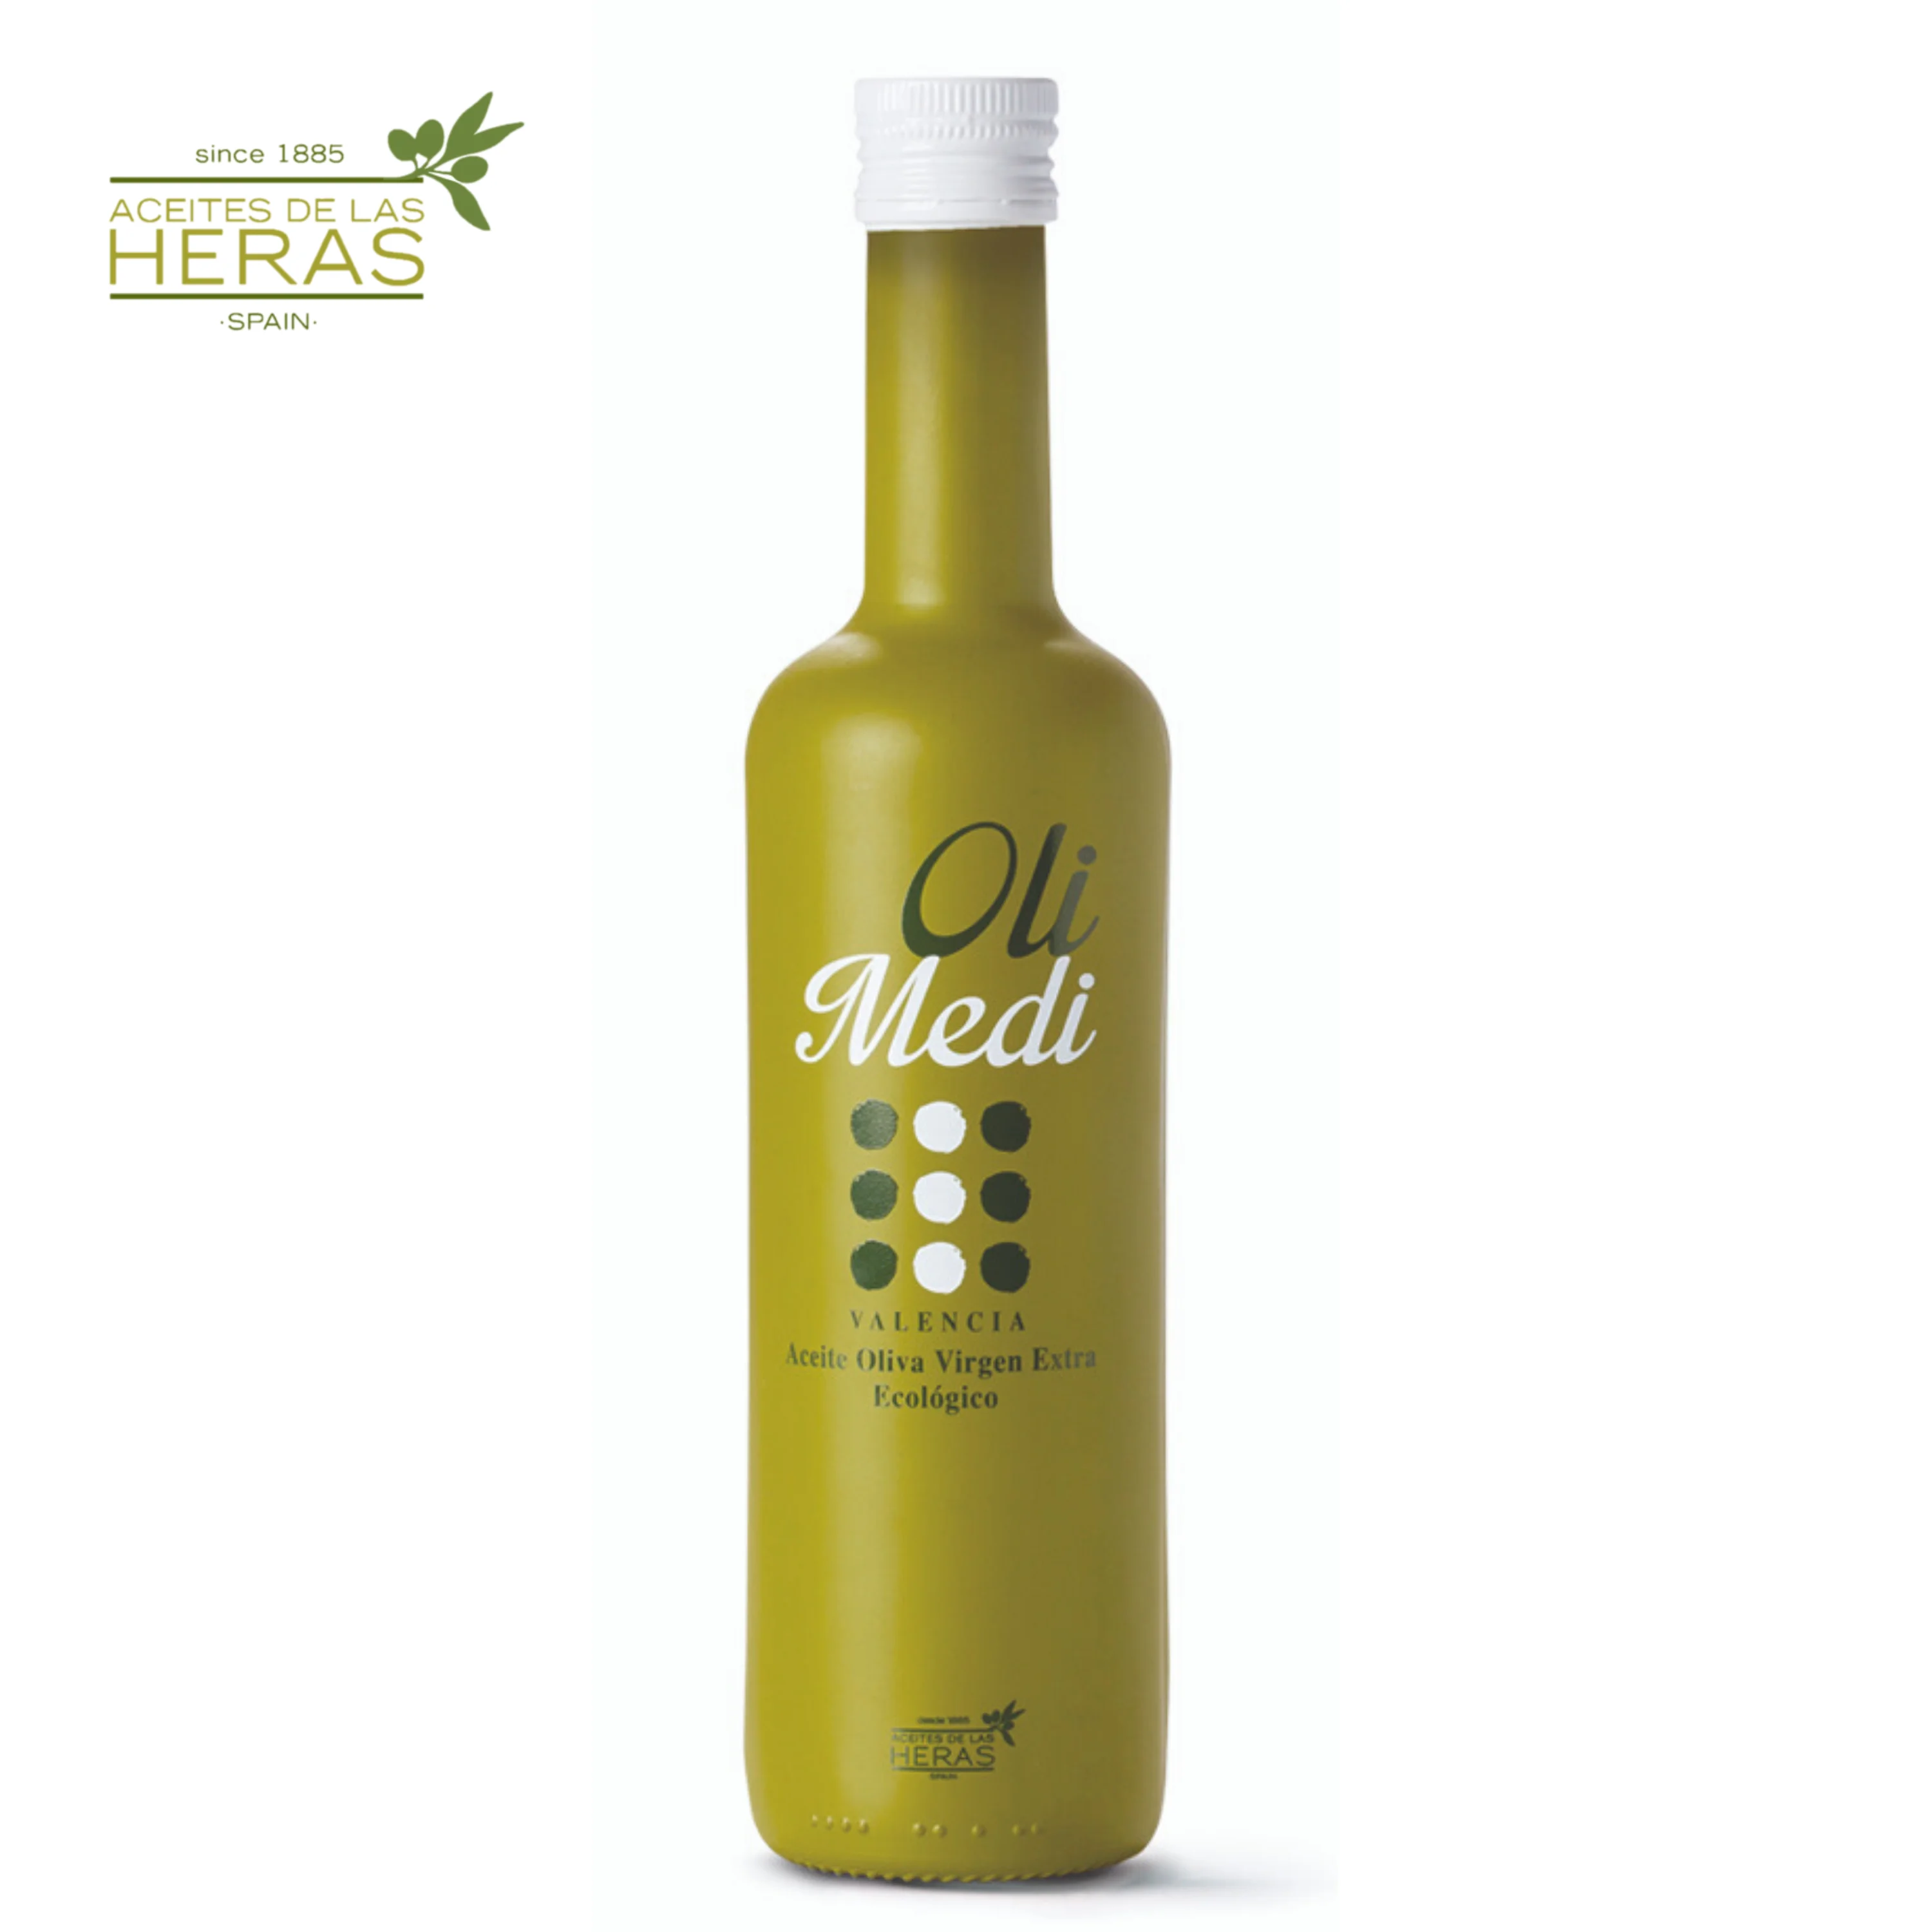 Olimedi – Organic Extra Virgin Olive Oil – 500 ml Glass Bottle – 100% Natural Organic EVOO from Spain